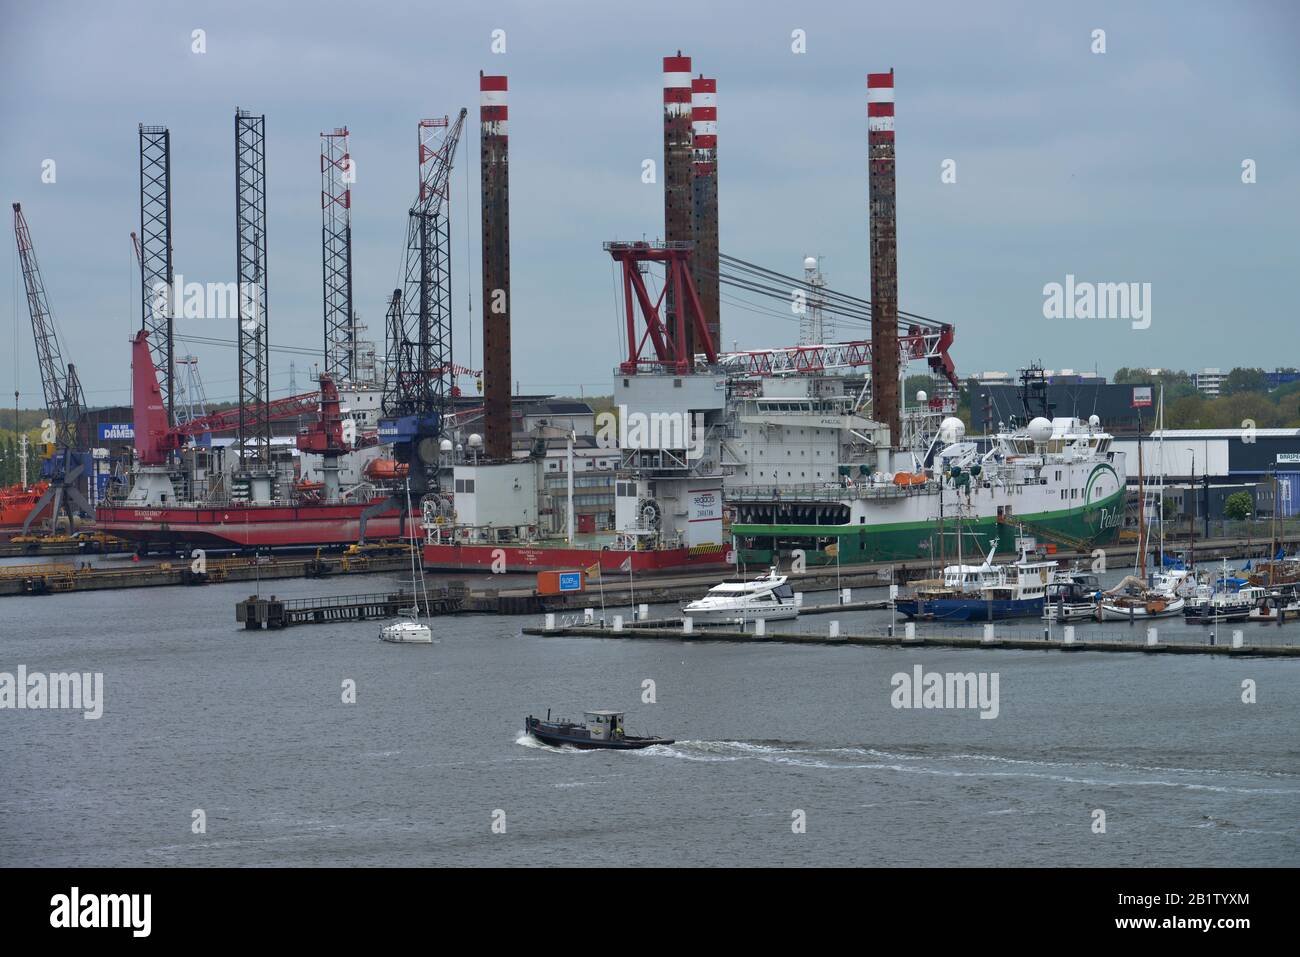 Damen Shipyards, Melissaweg, Amsterdam, Niederlande Foto Stock